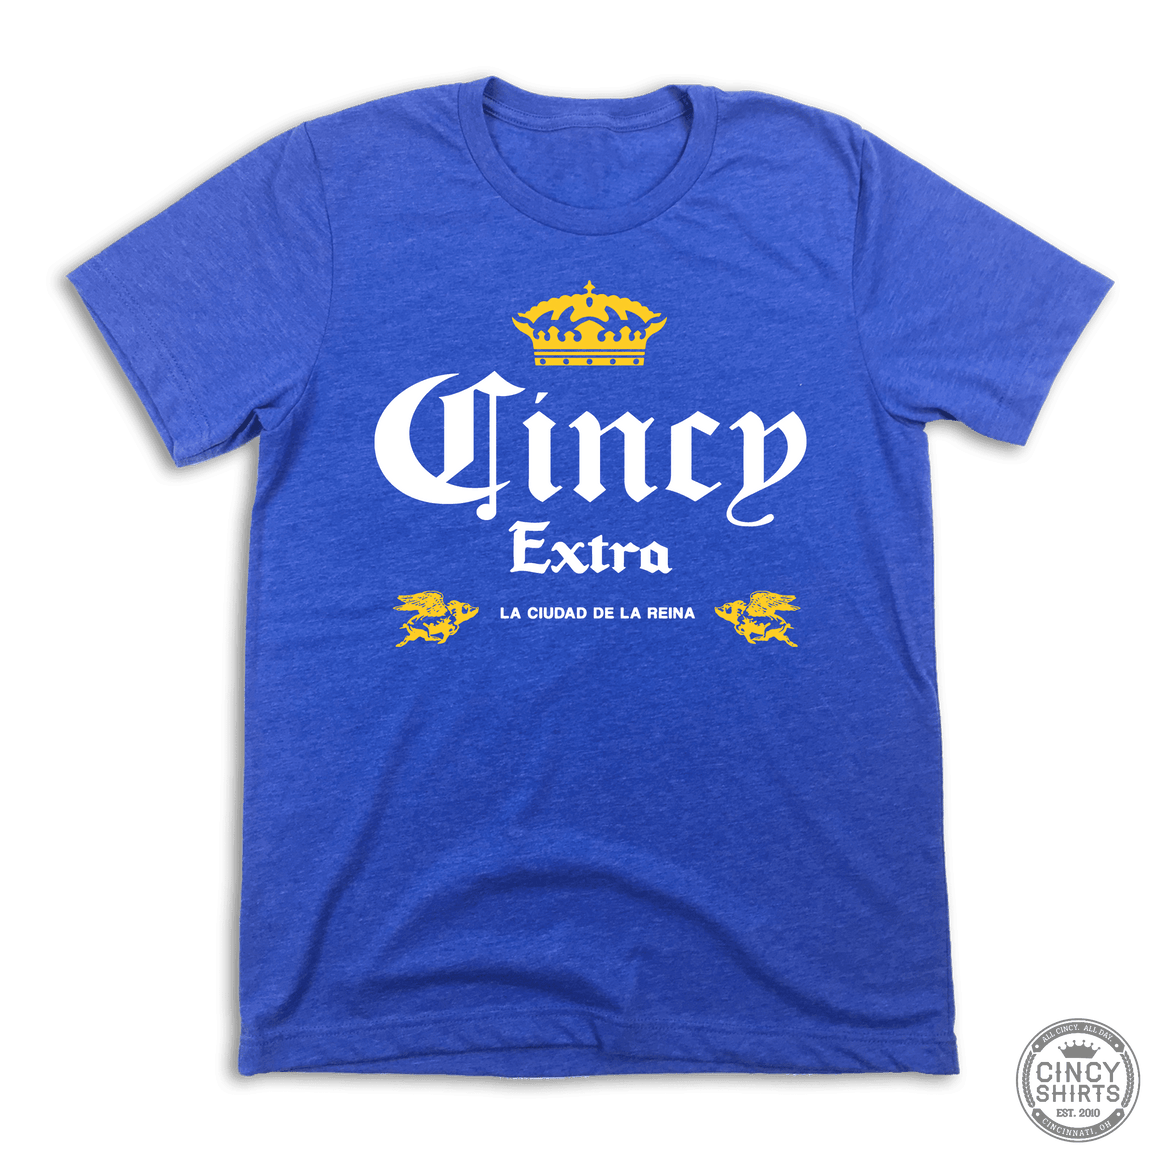 Cincy Extra - Cincy Shirts